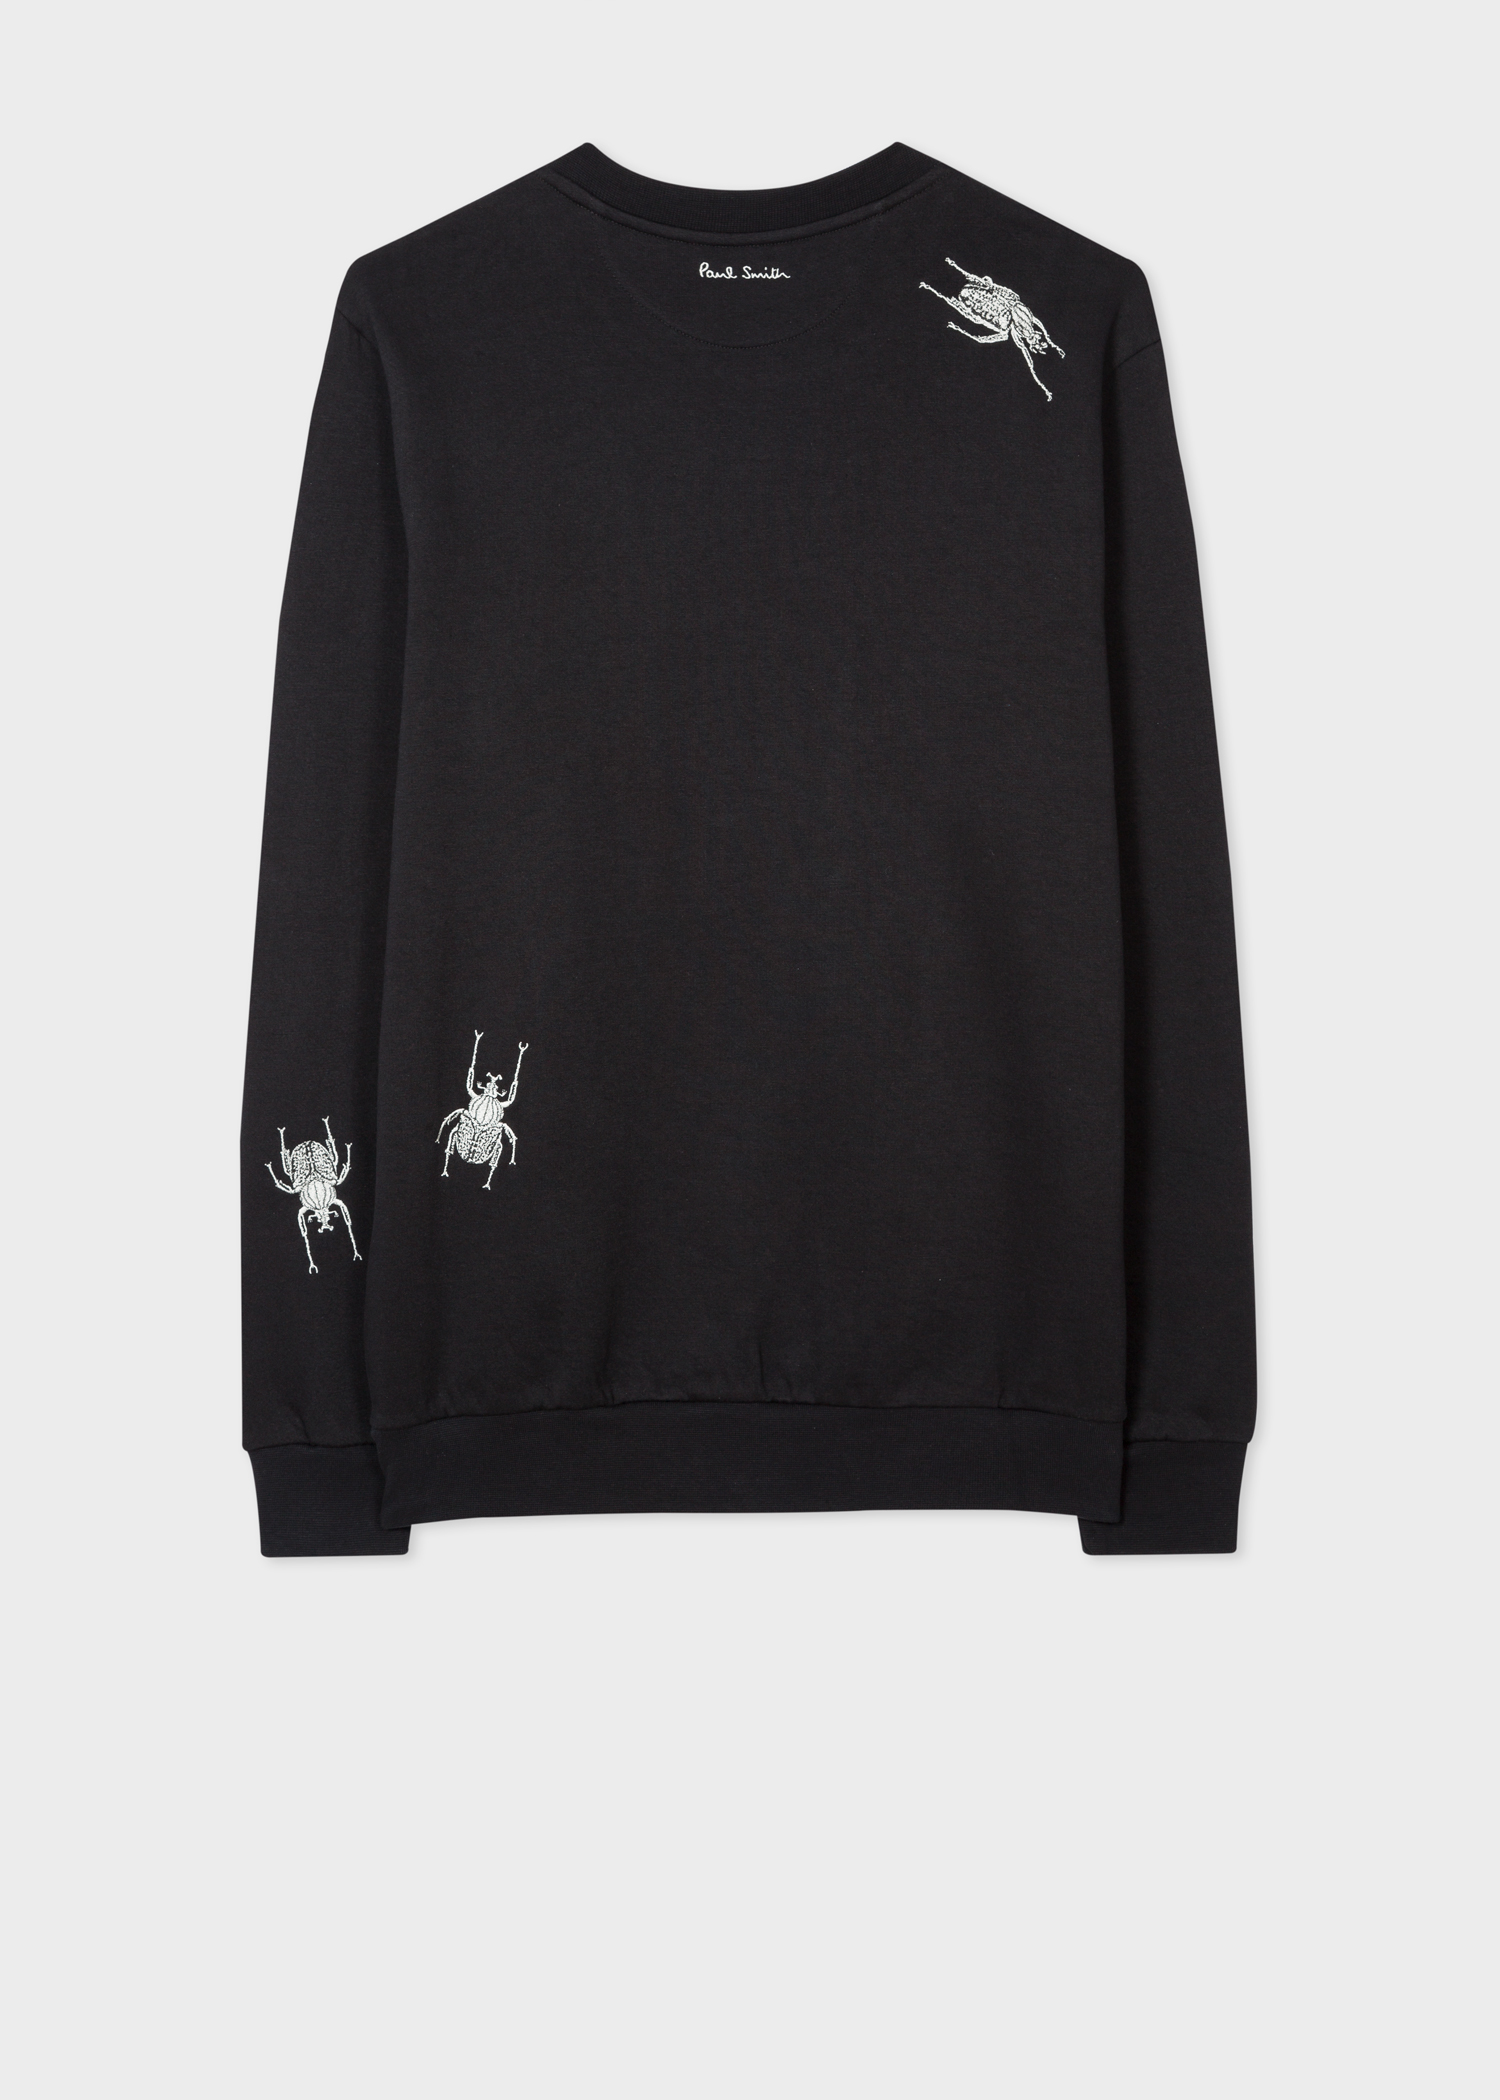 Back view - Men's Black Embroidered 'Beetle' Sweatshirt Paul Smith